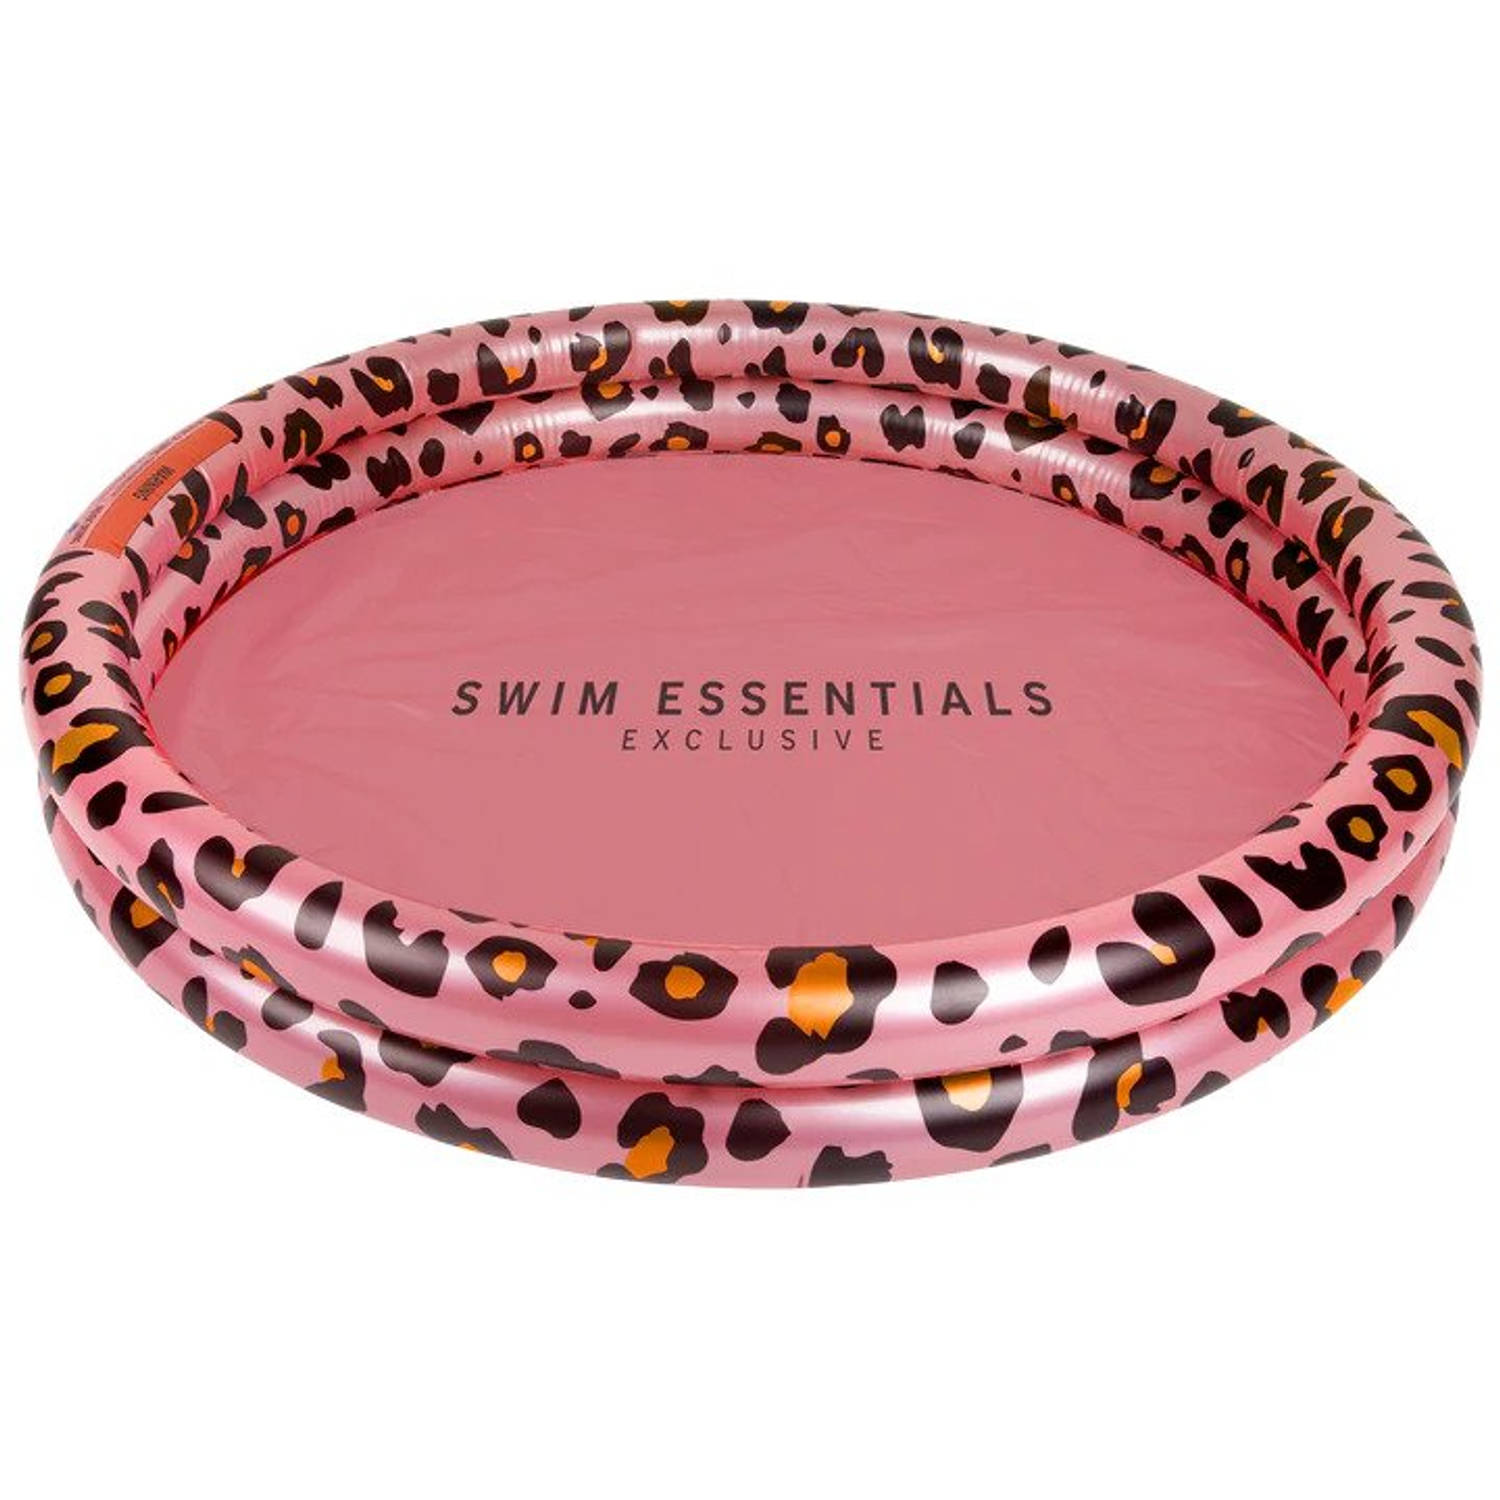 Swim Essentials kinder zwembad